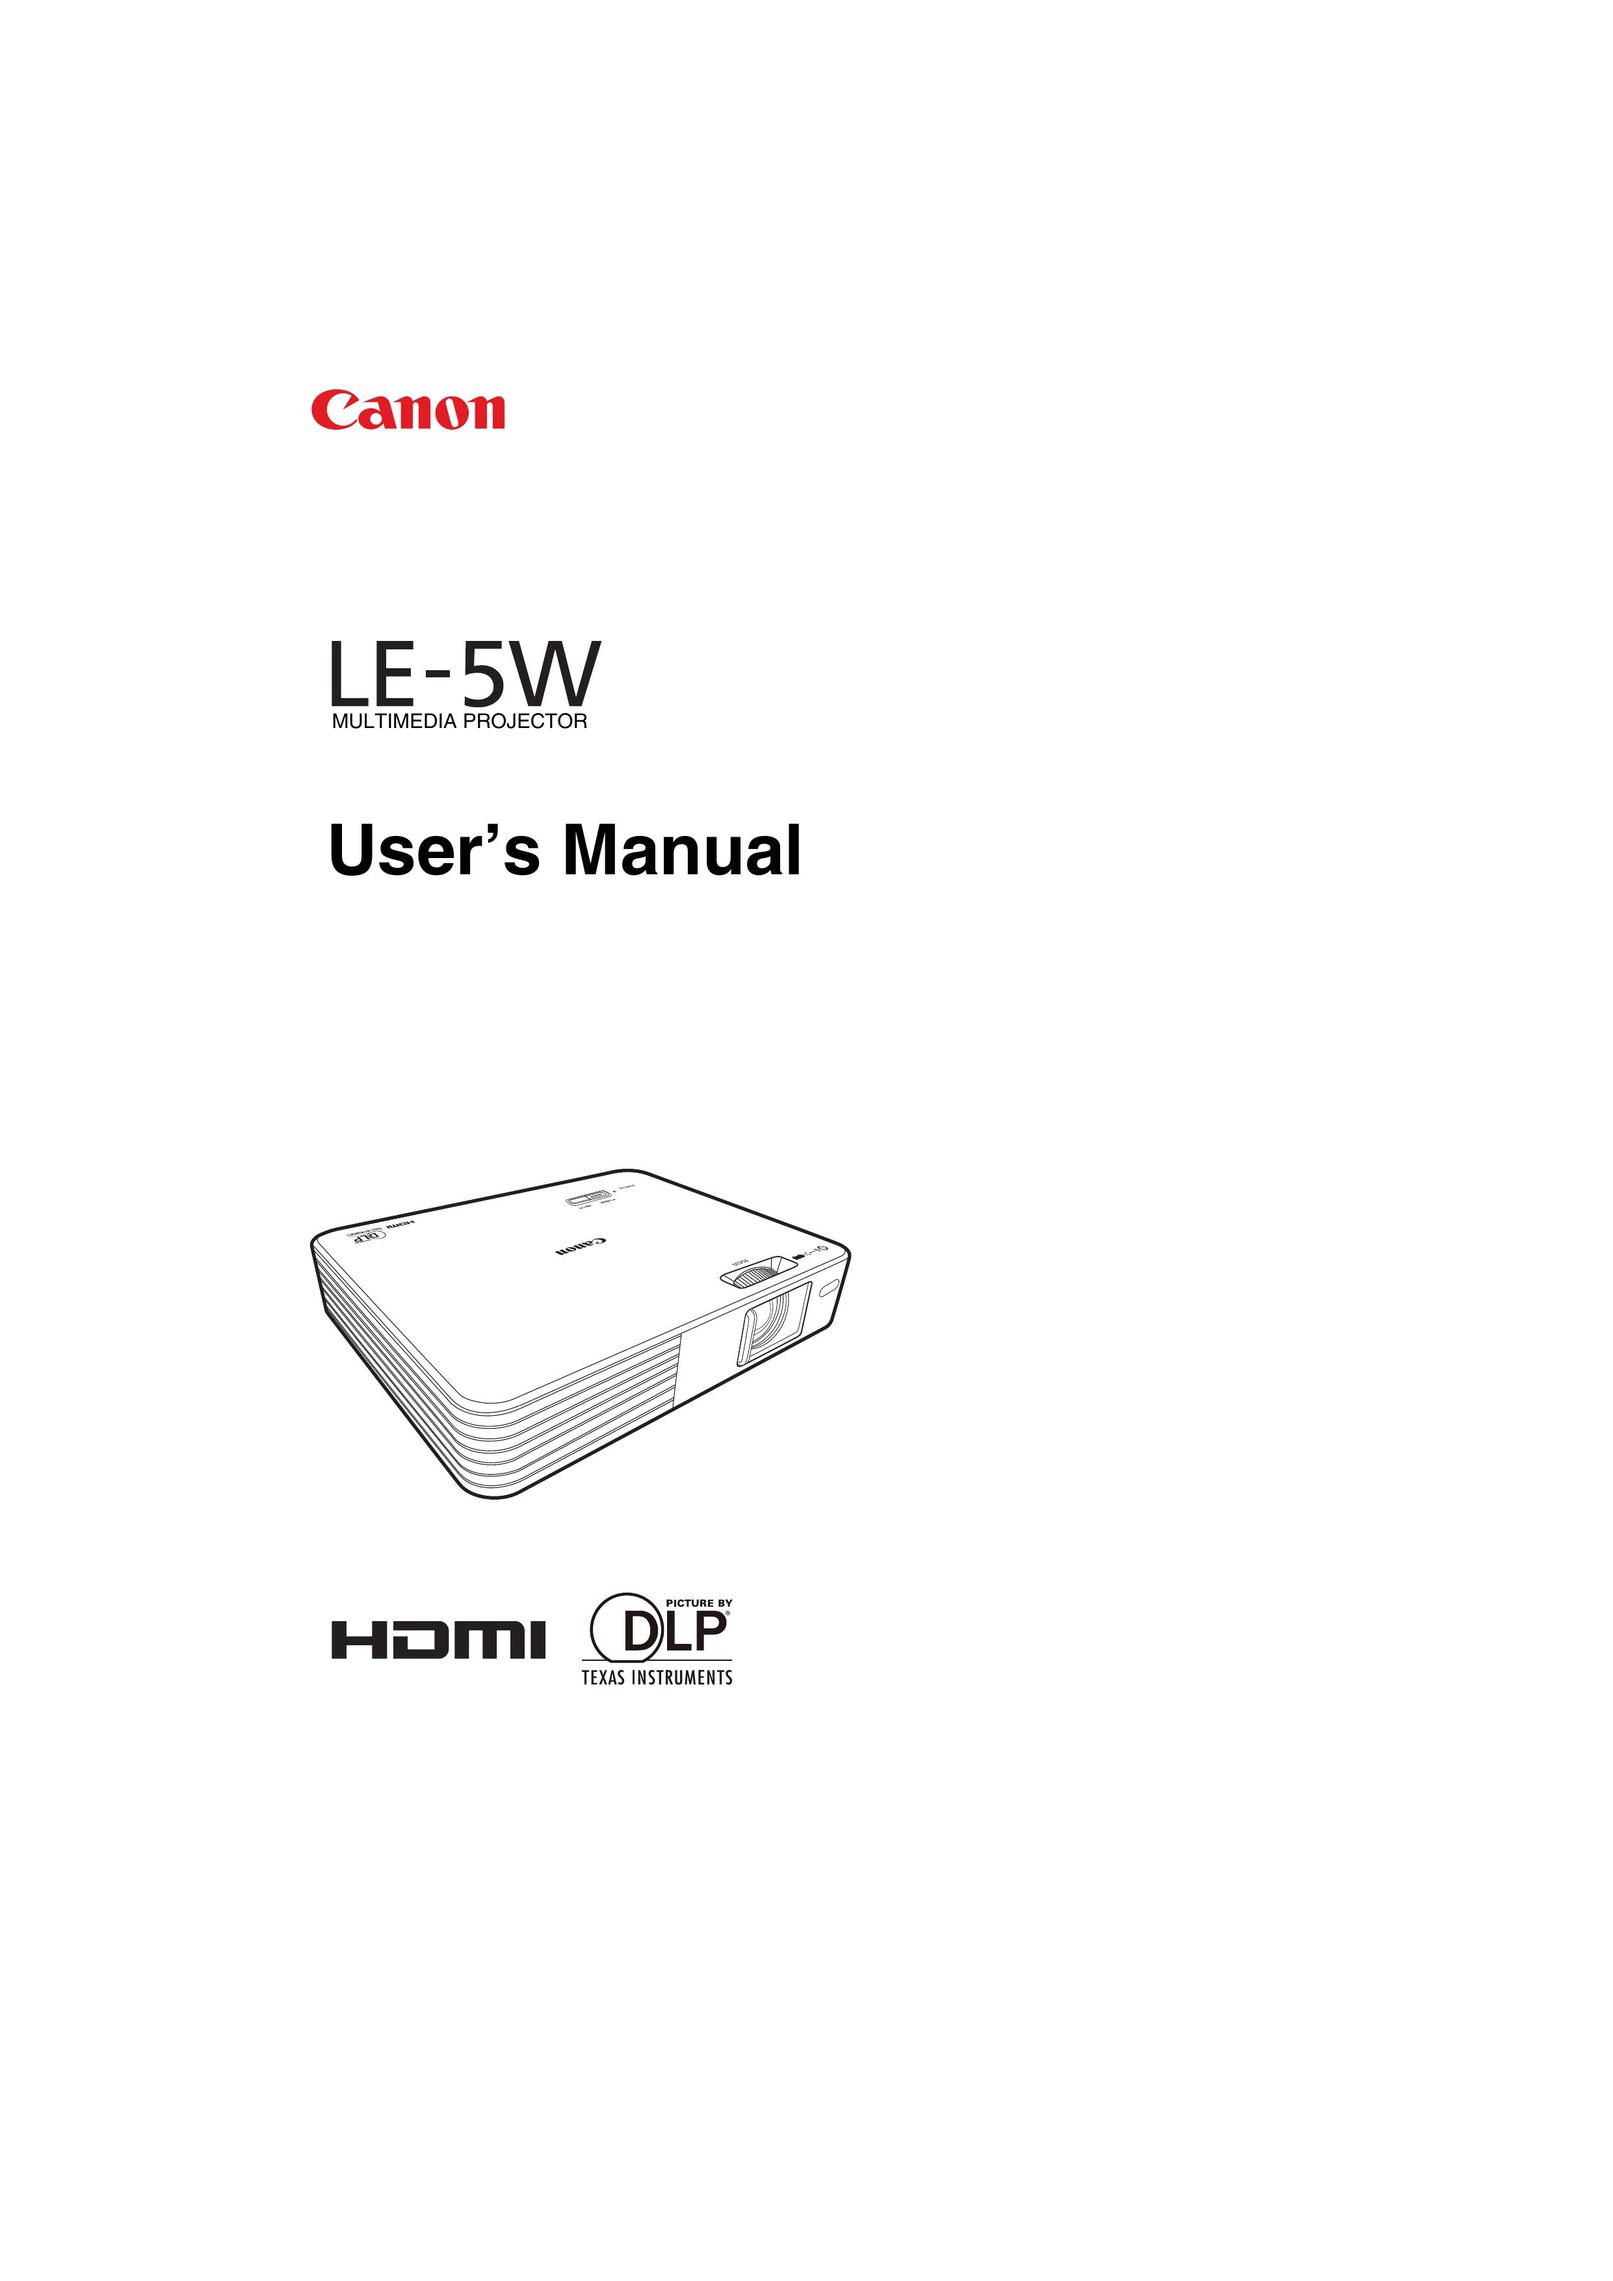 Canon LE-5W Projector User Manual